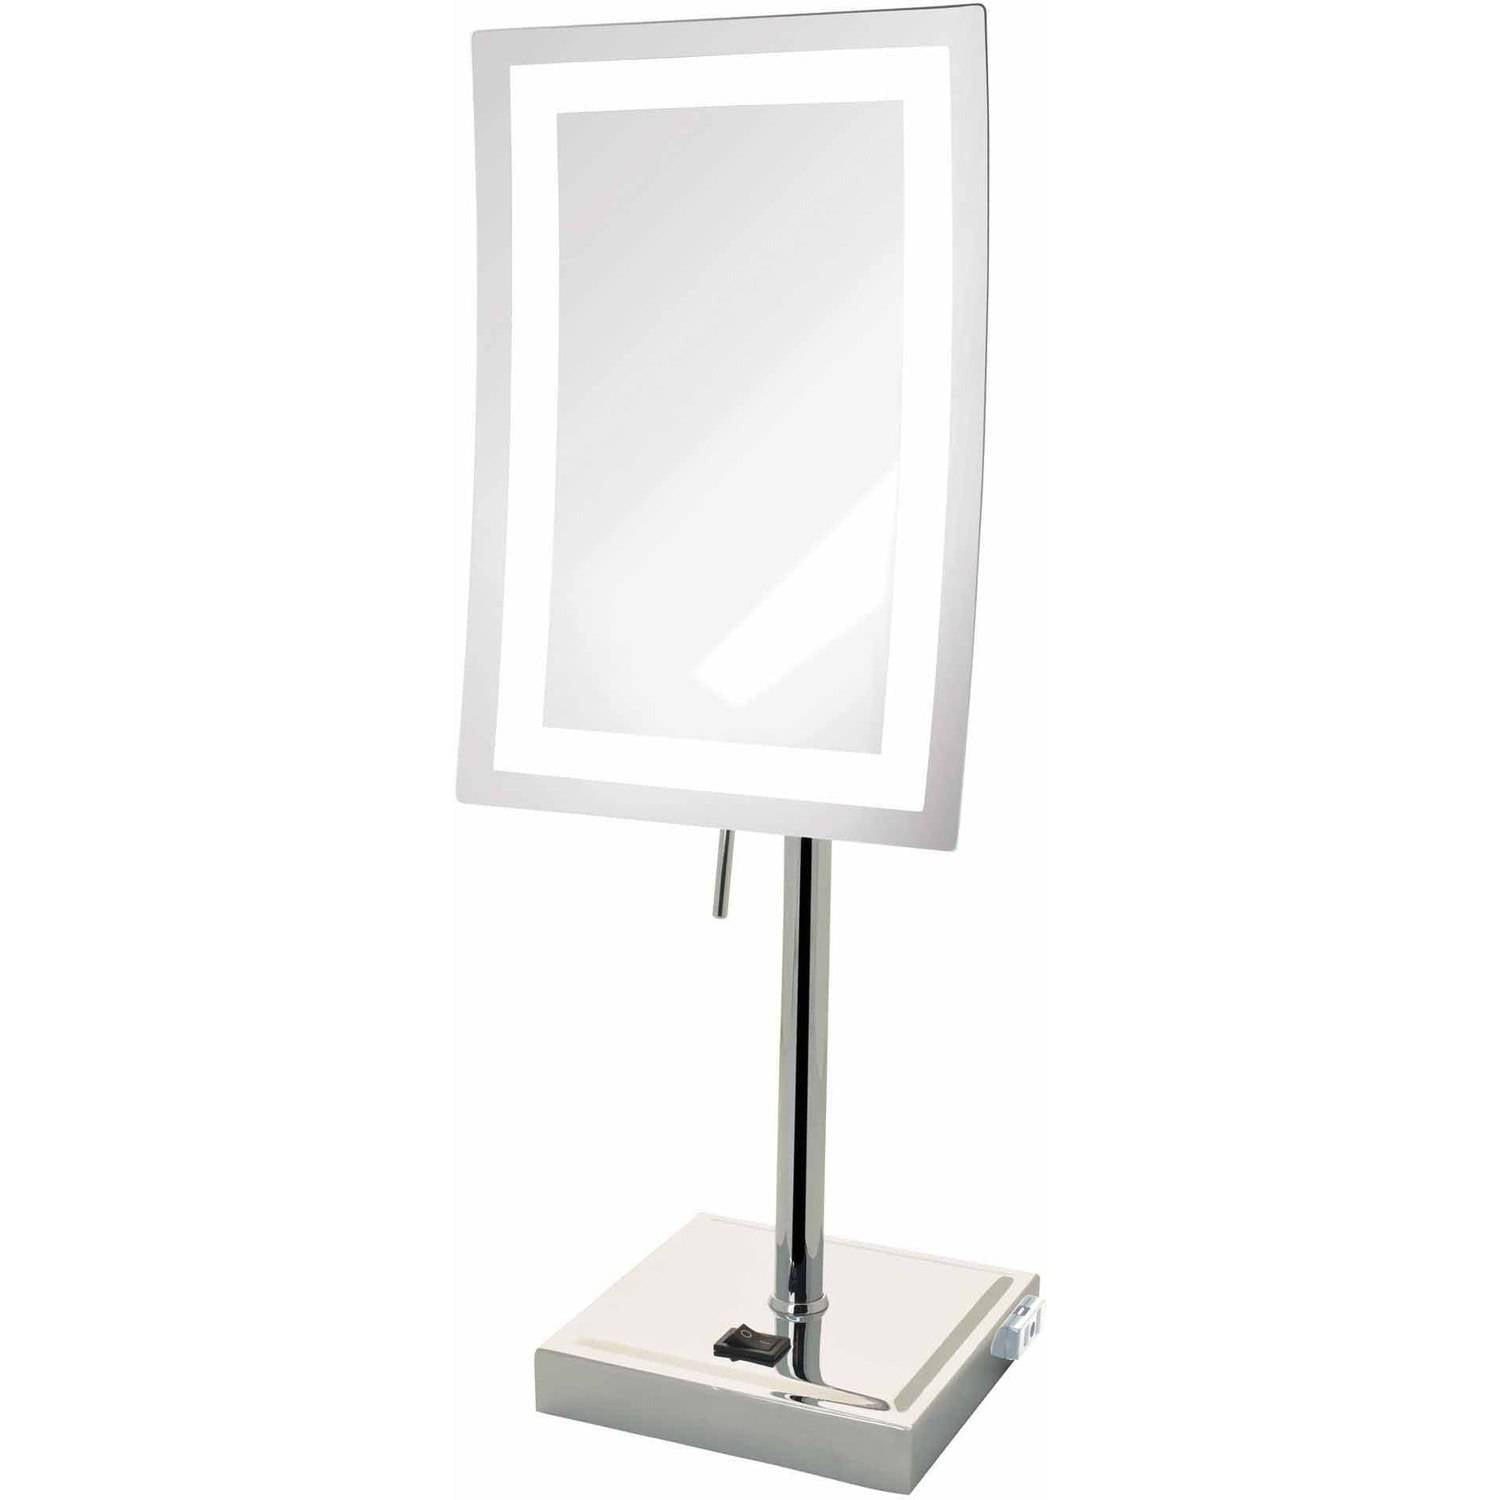 image: Jerdon JRT910CL Magnified Lighted Tabletop Rectangular Mirror, Chrome Finish, 67.2 oz